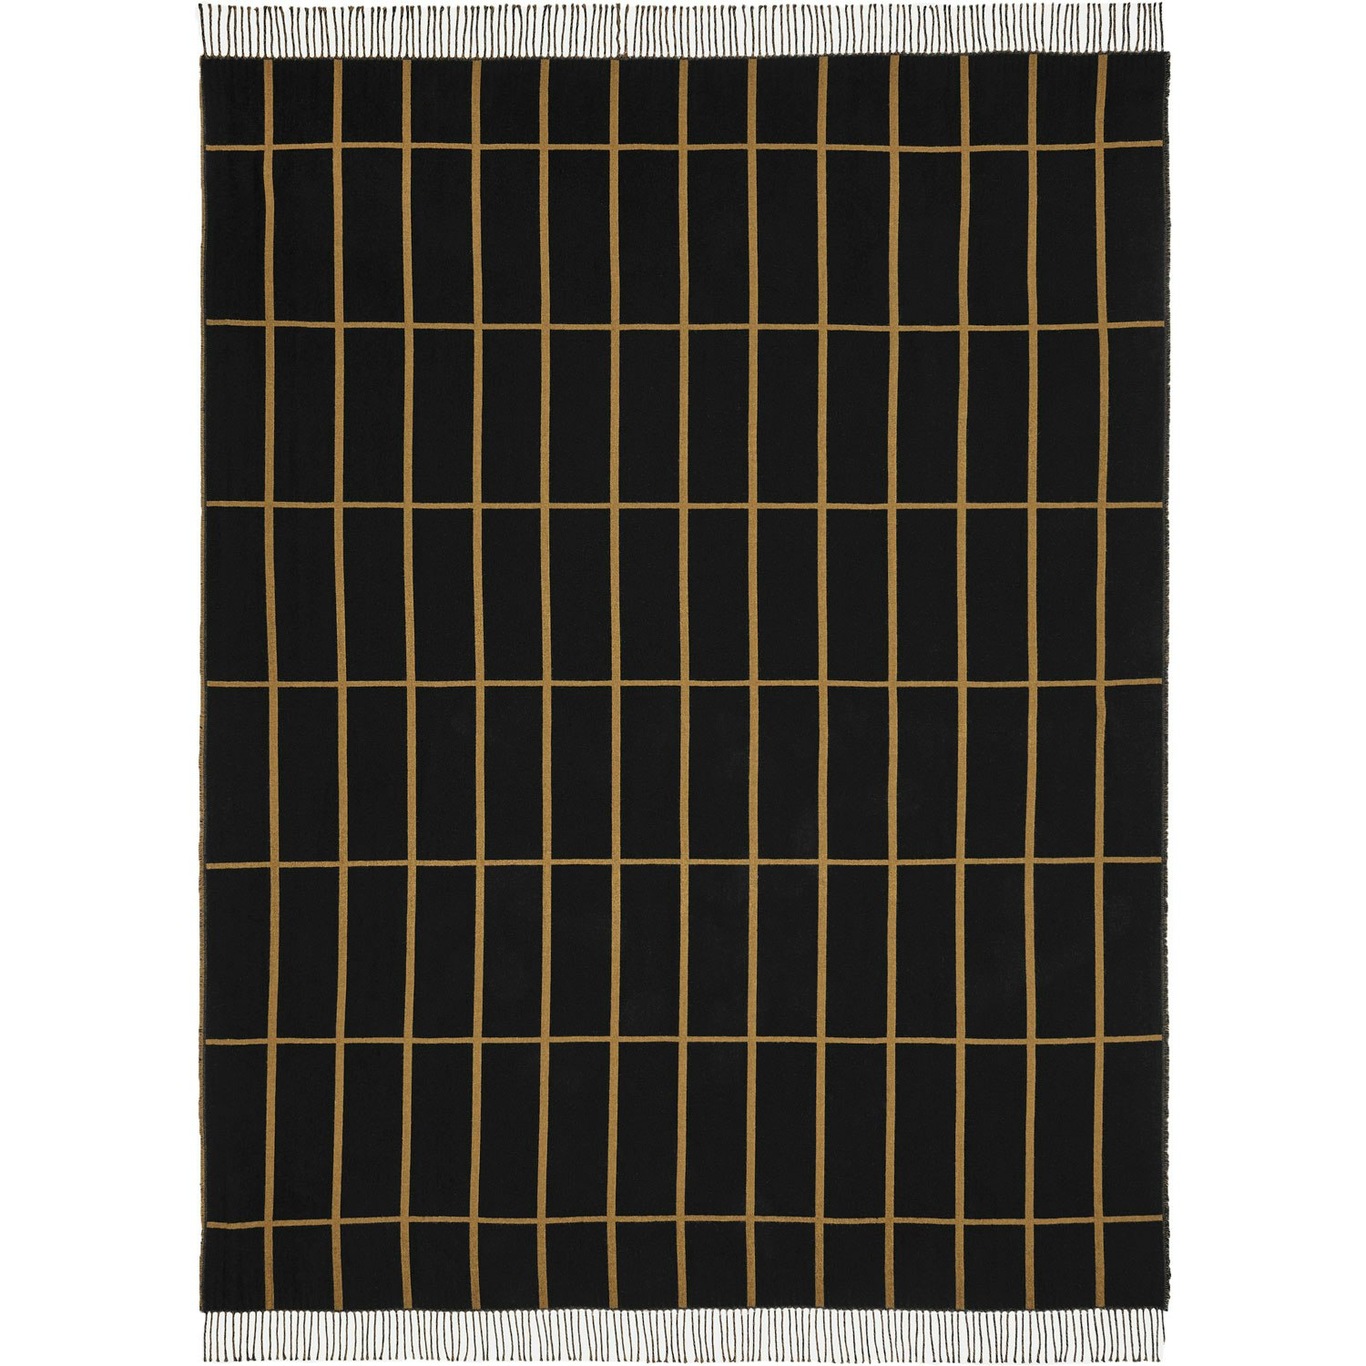 Tiiliskivi Plaid 140x180 cm, Goud / Caviar